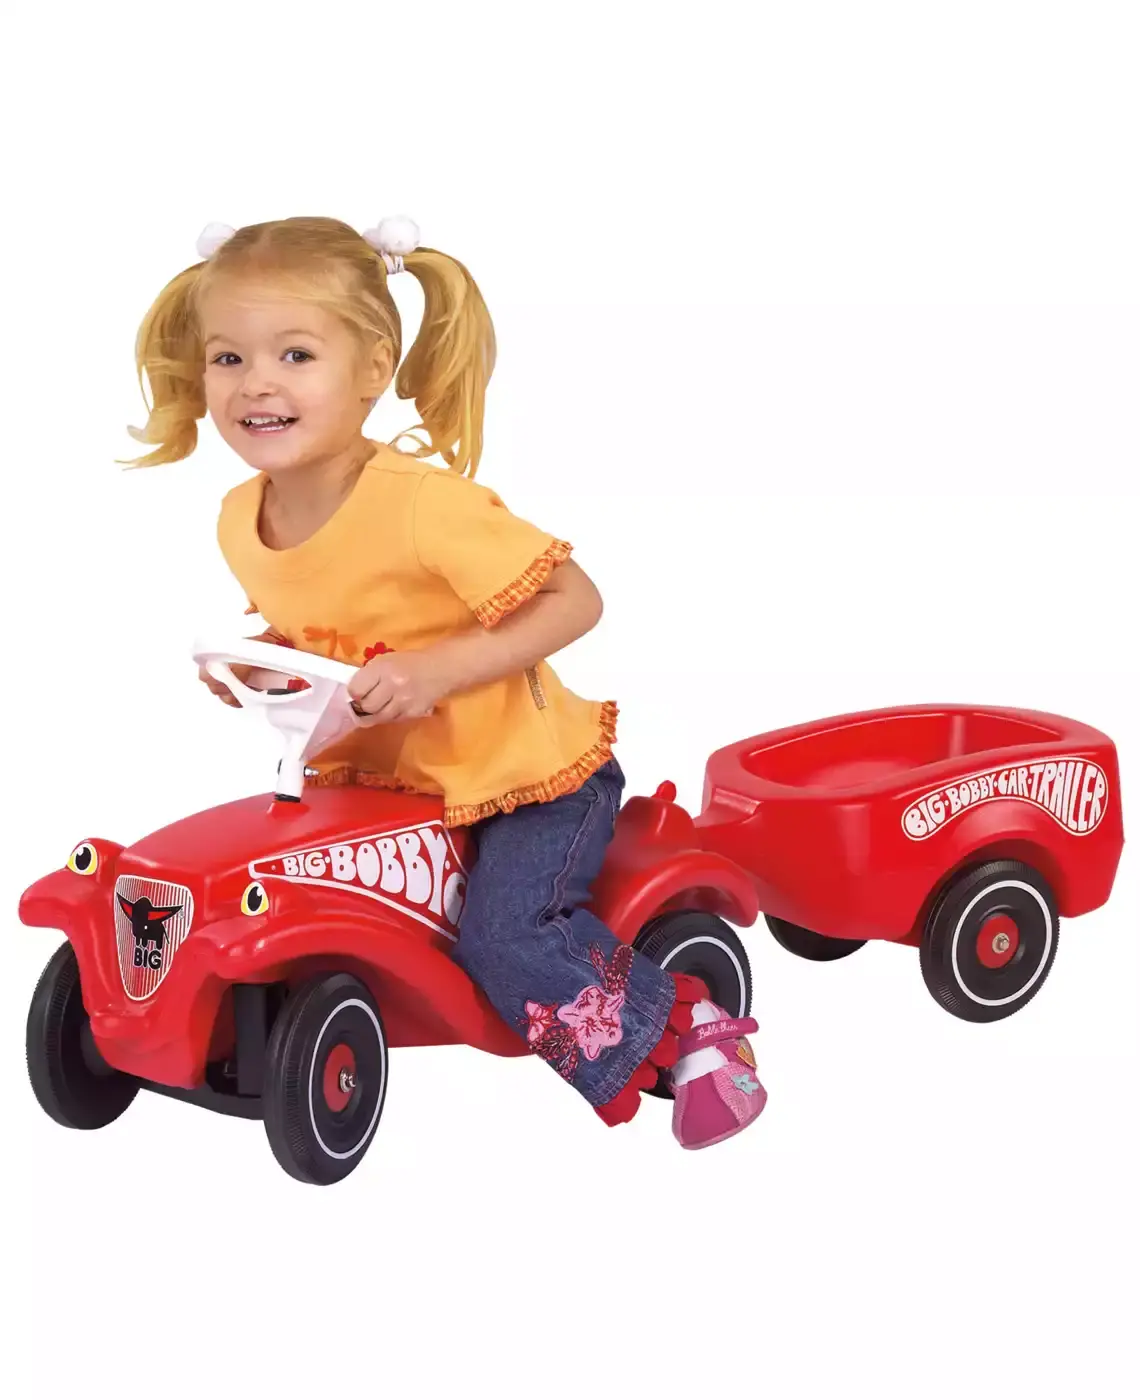 Bobby Car Anhänger Rot BIG 2000540736603 2